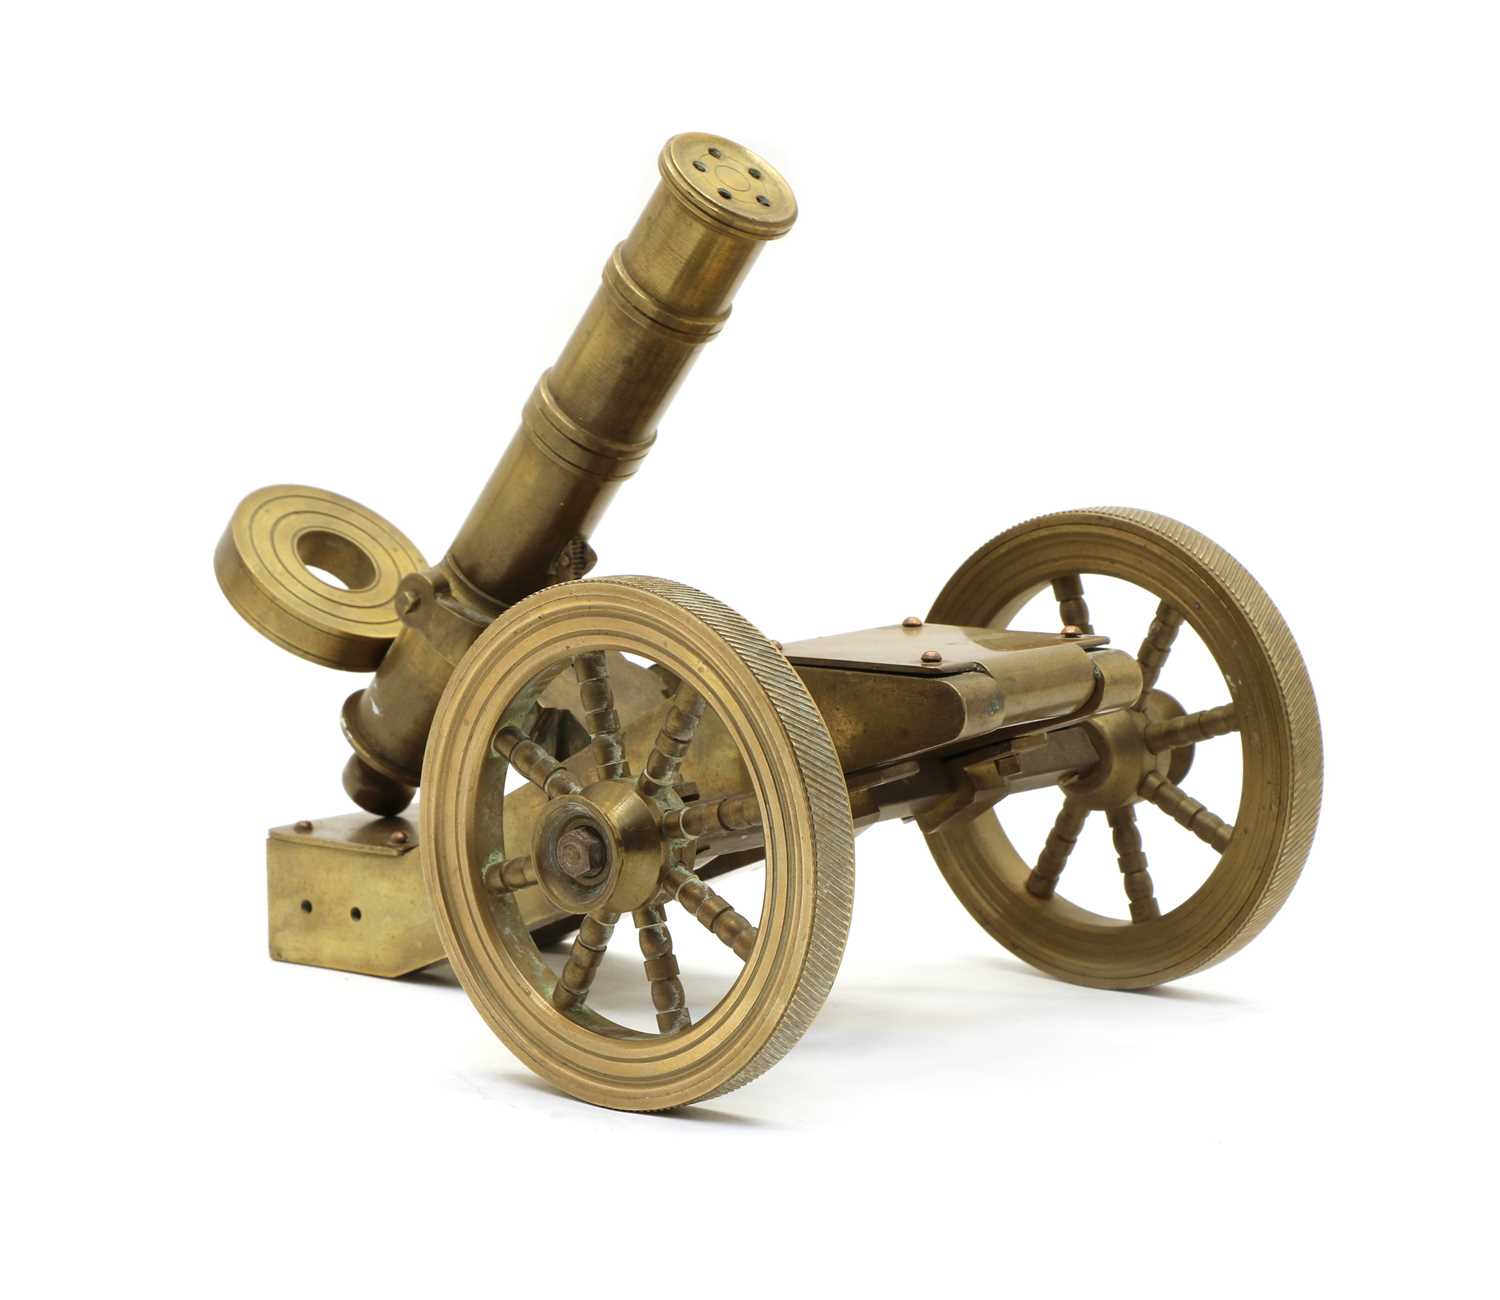 A scratch built brass model of a field cannon or Maxim gun, - Image 2 of 3